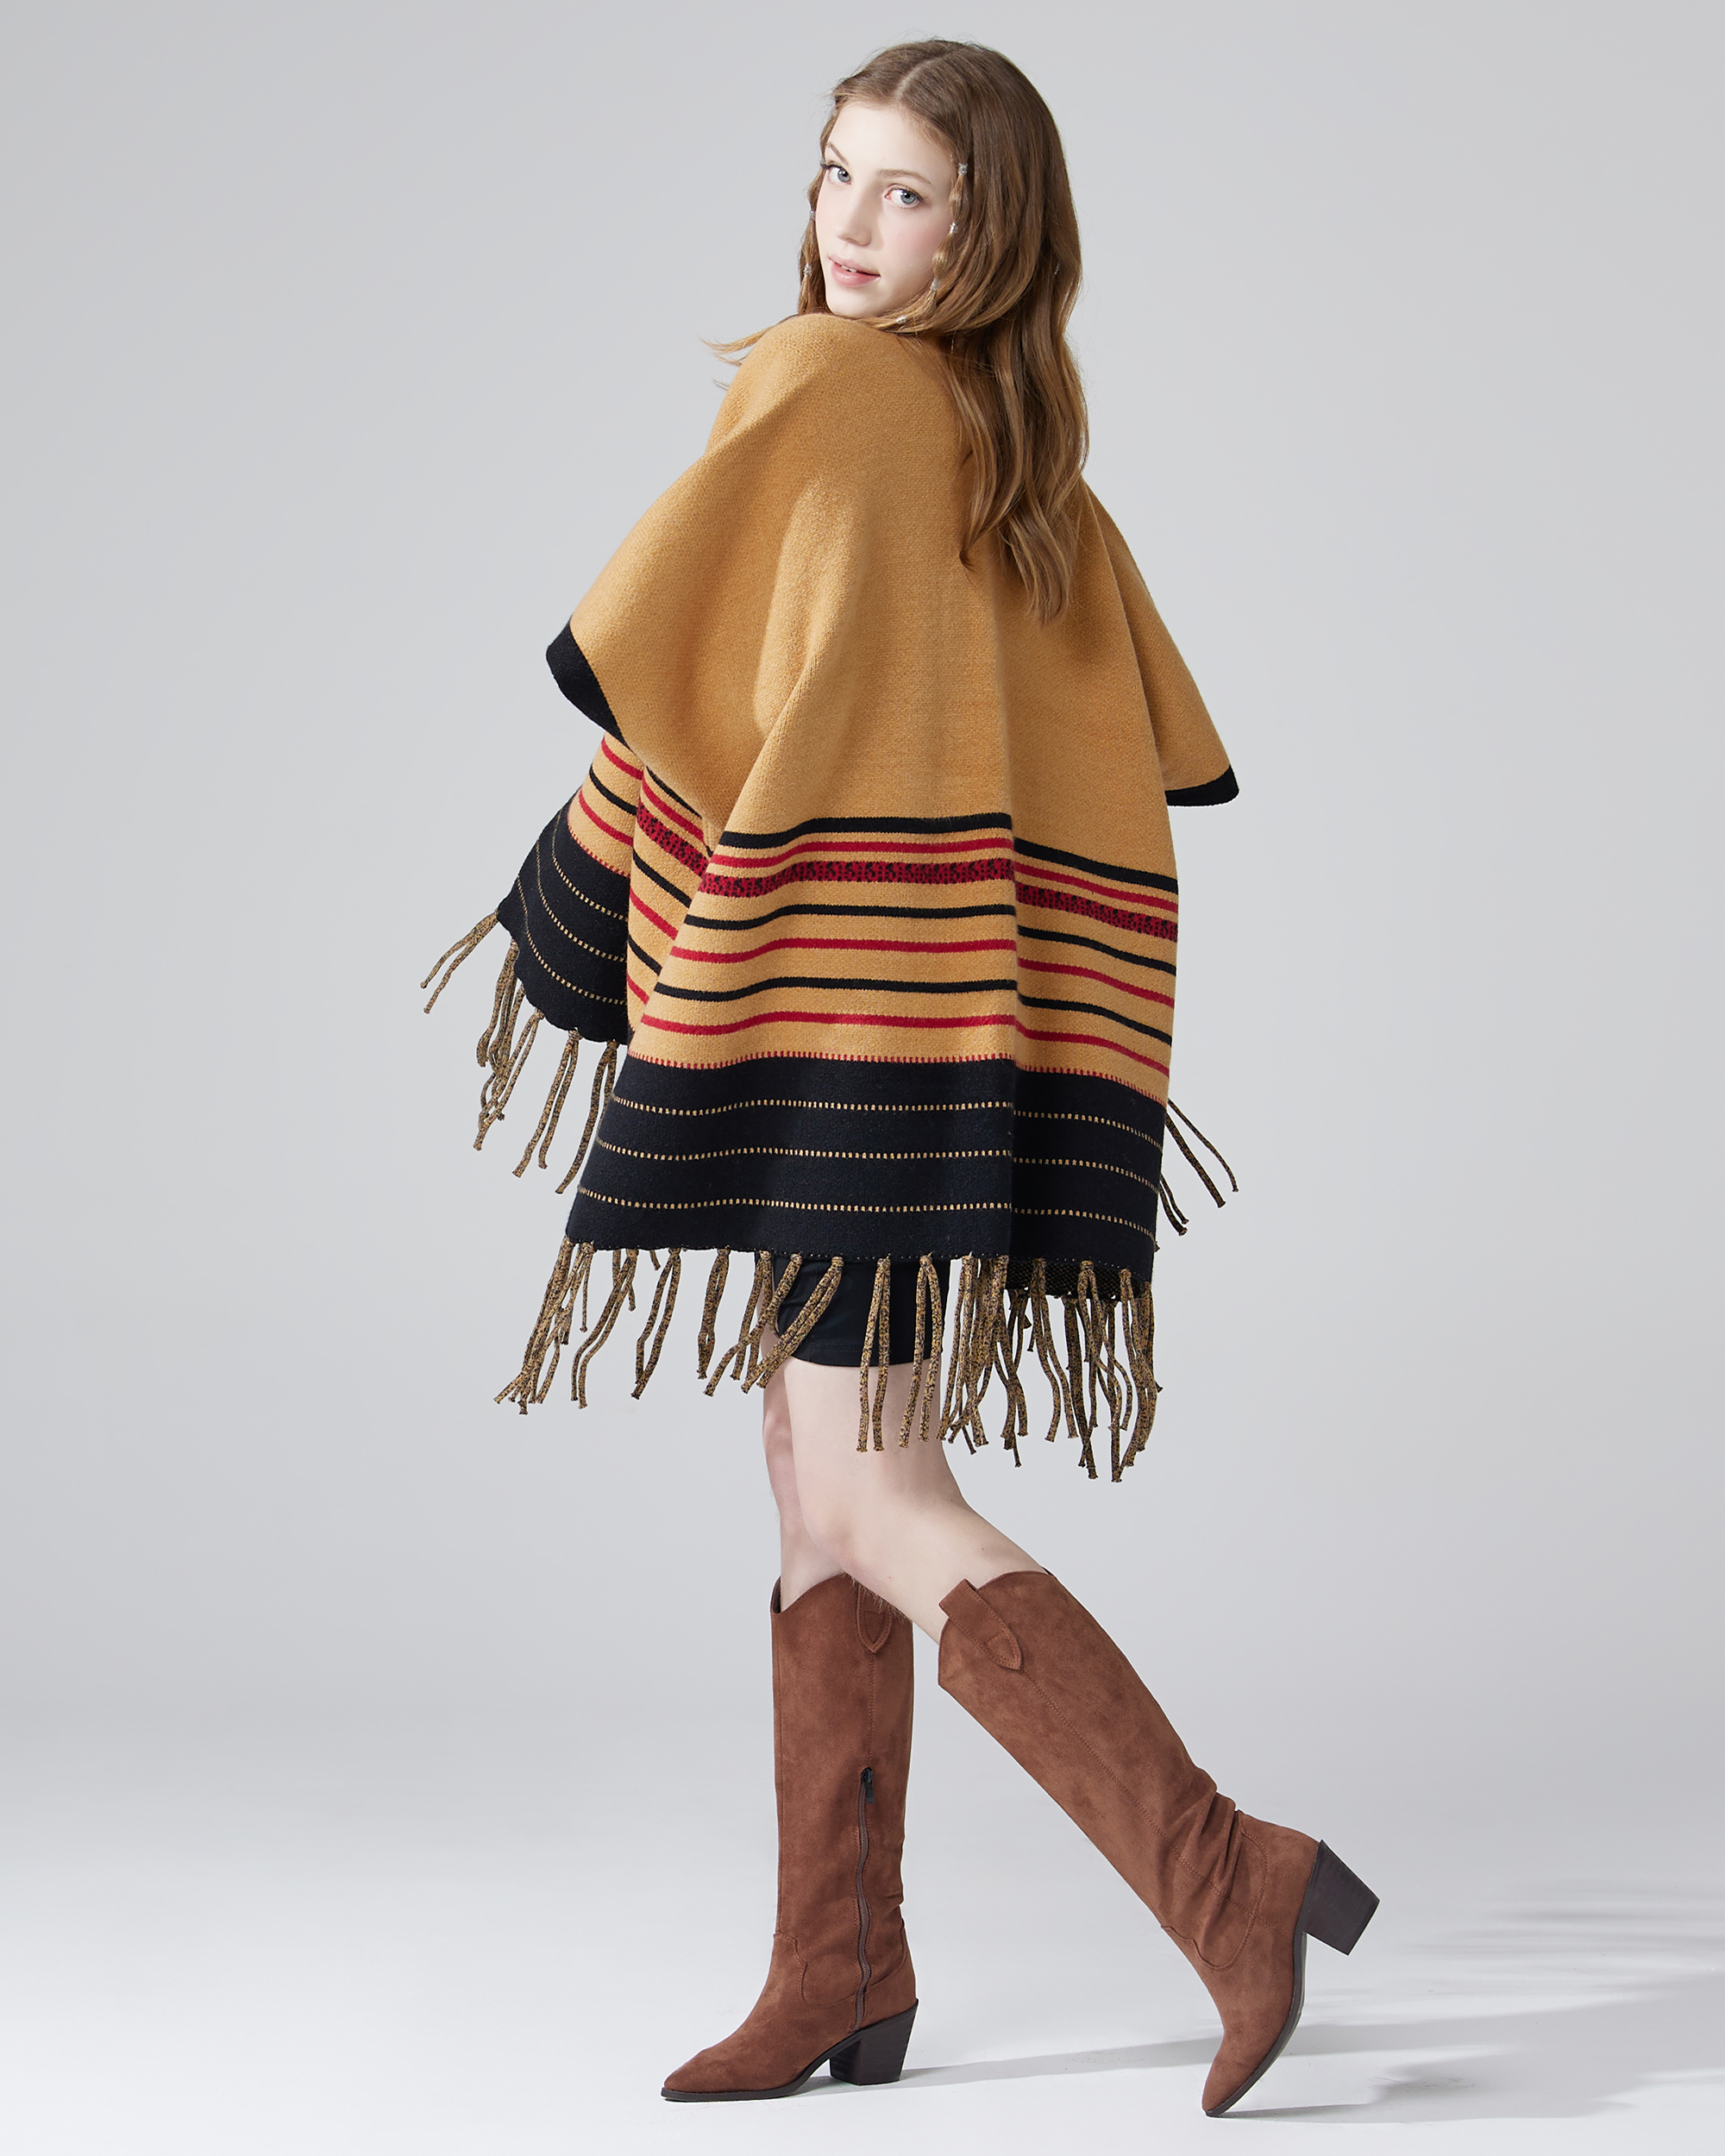 Western Striped Fringed Ruana Poncho Sweater Cardigan - Tan